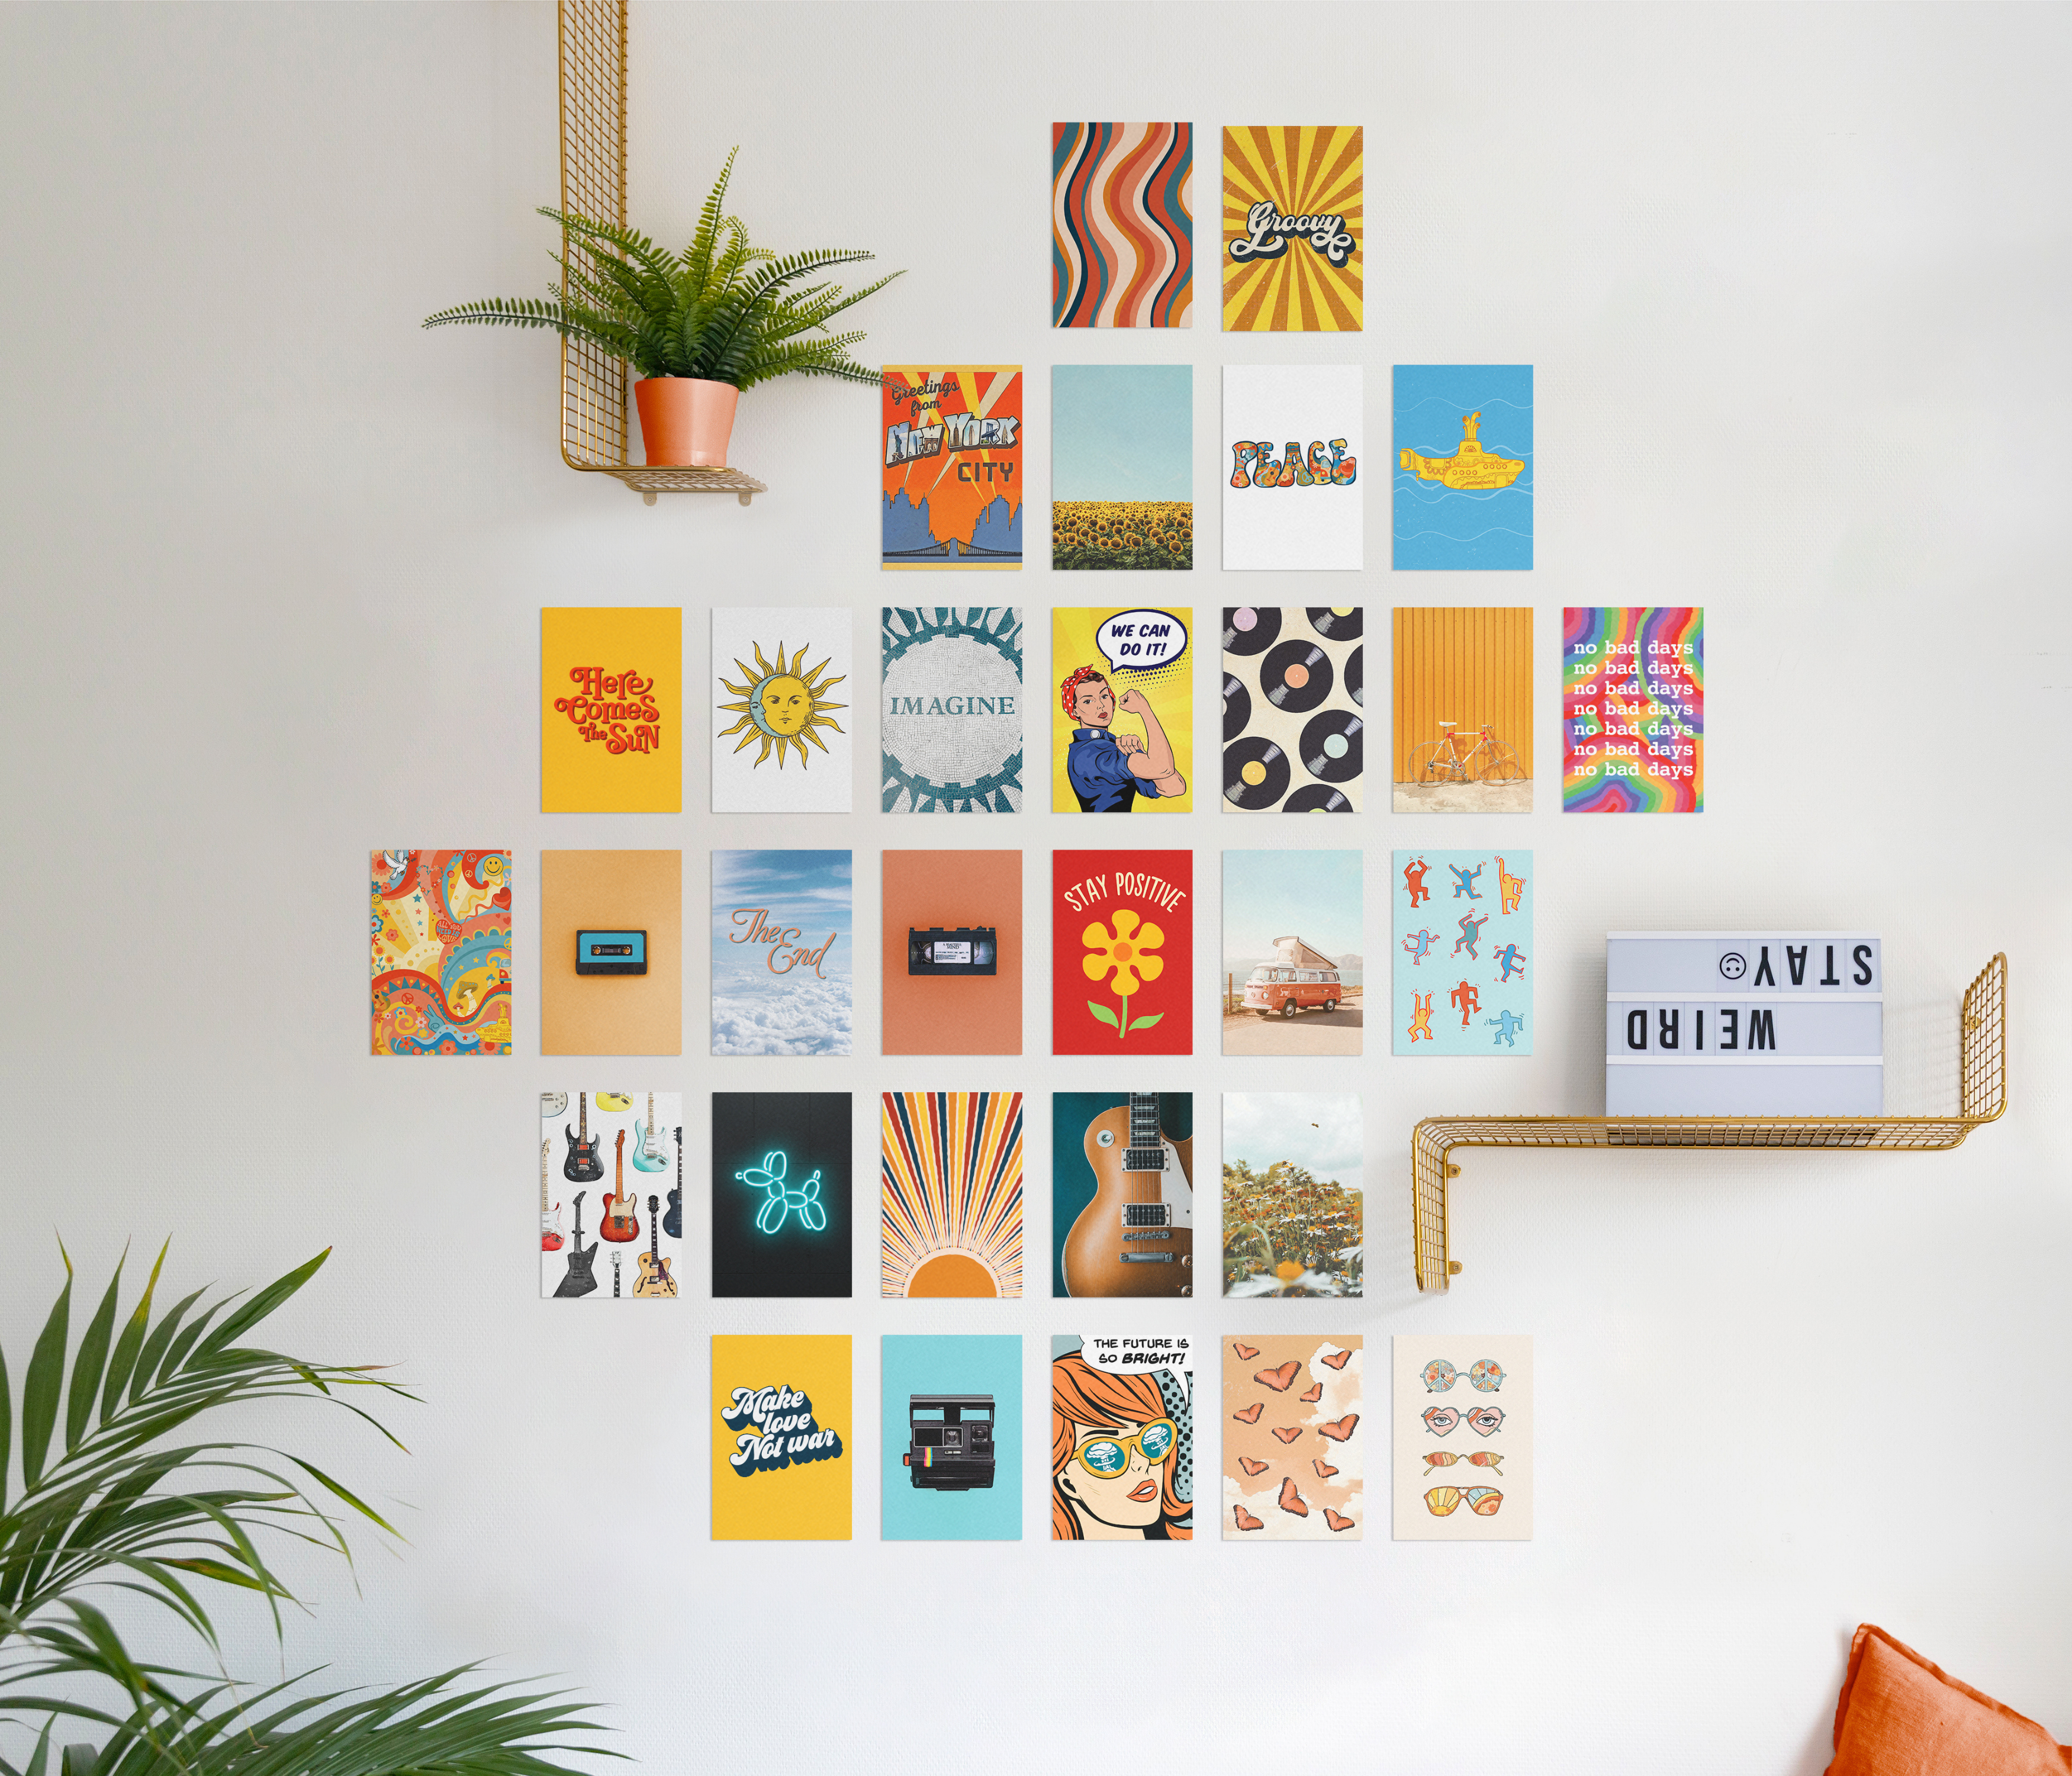 Let's Blog Off – Thumbtacks & Hanging Items on Walls